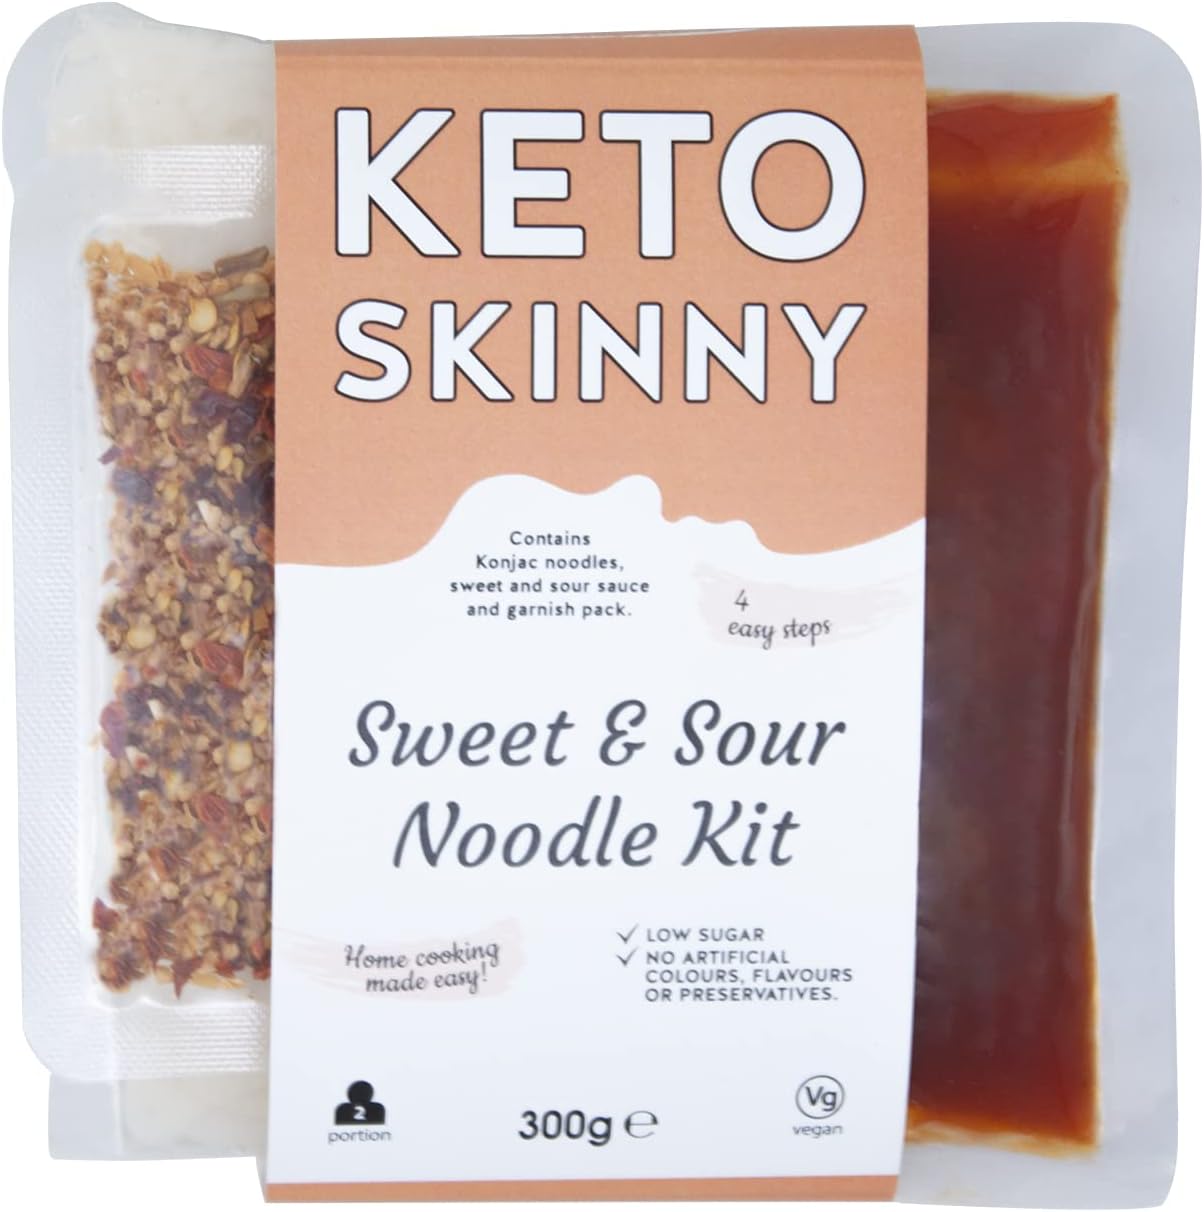 Keto Skinny Sweet & Sour Noodle Meal Kit 300g x 6 -